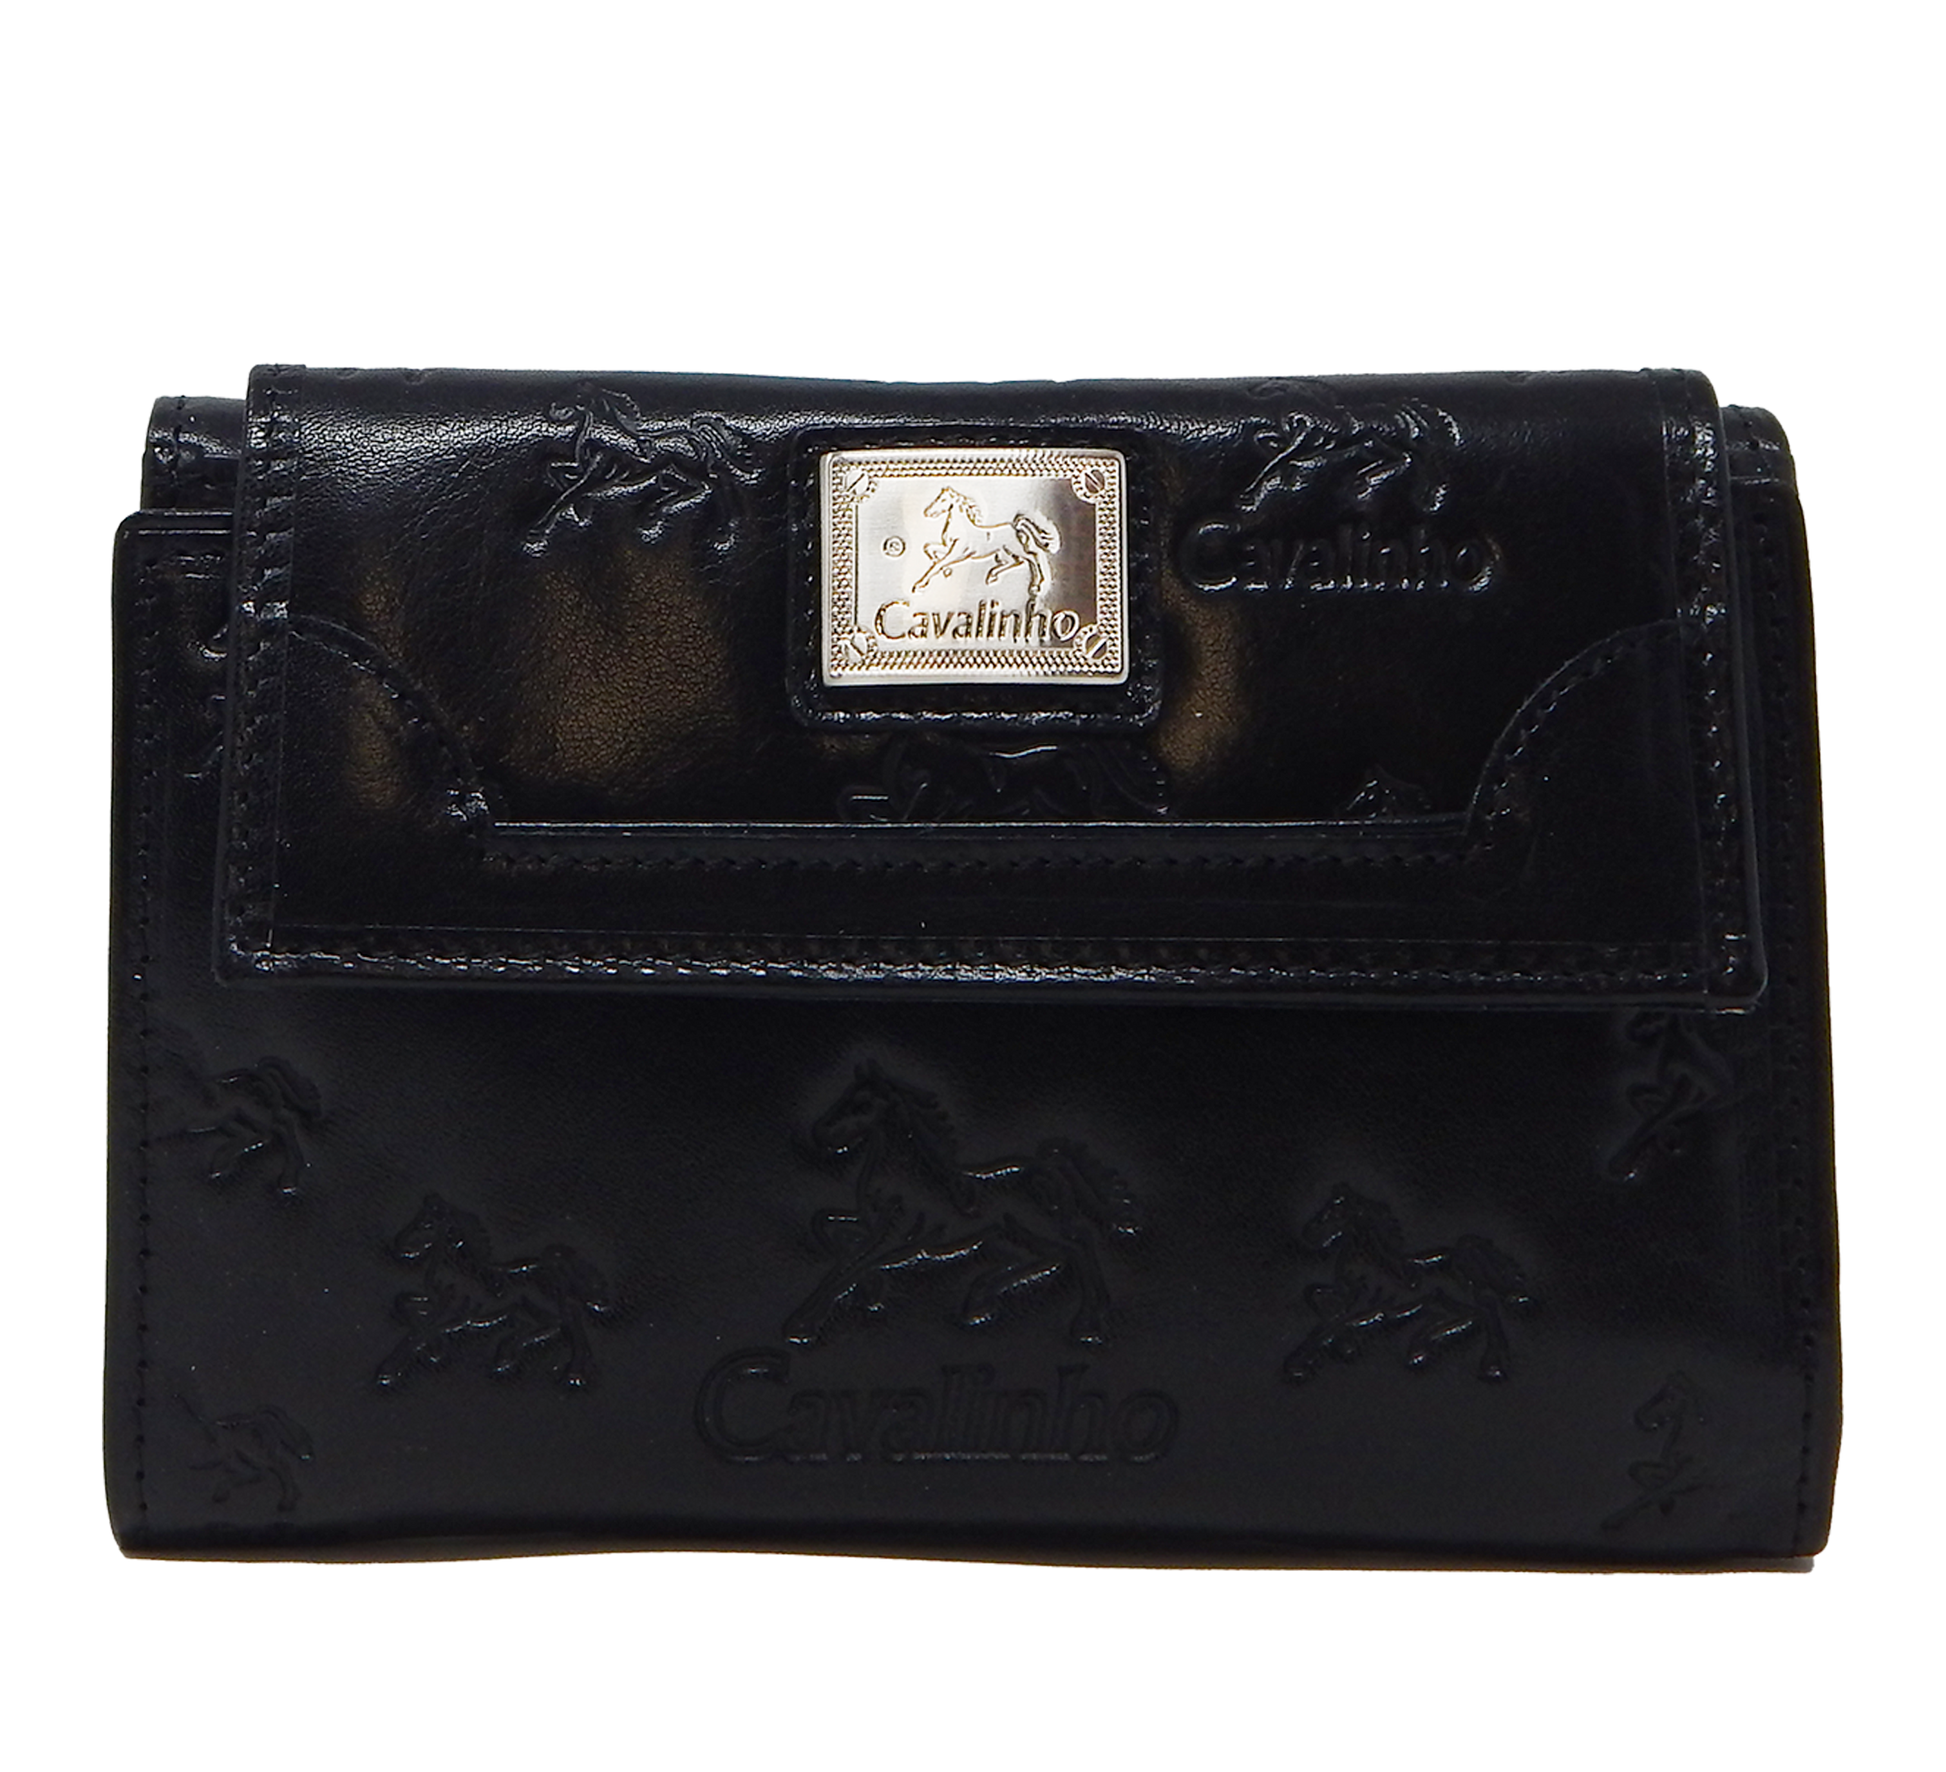 Cavalinho Cavalo Lusitano Leather Wallet - Black - 28090202_01